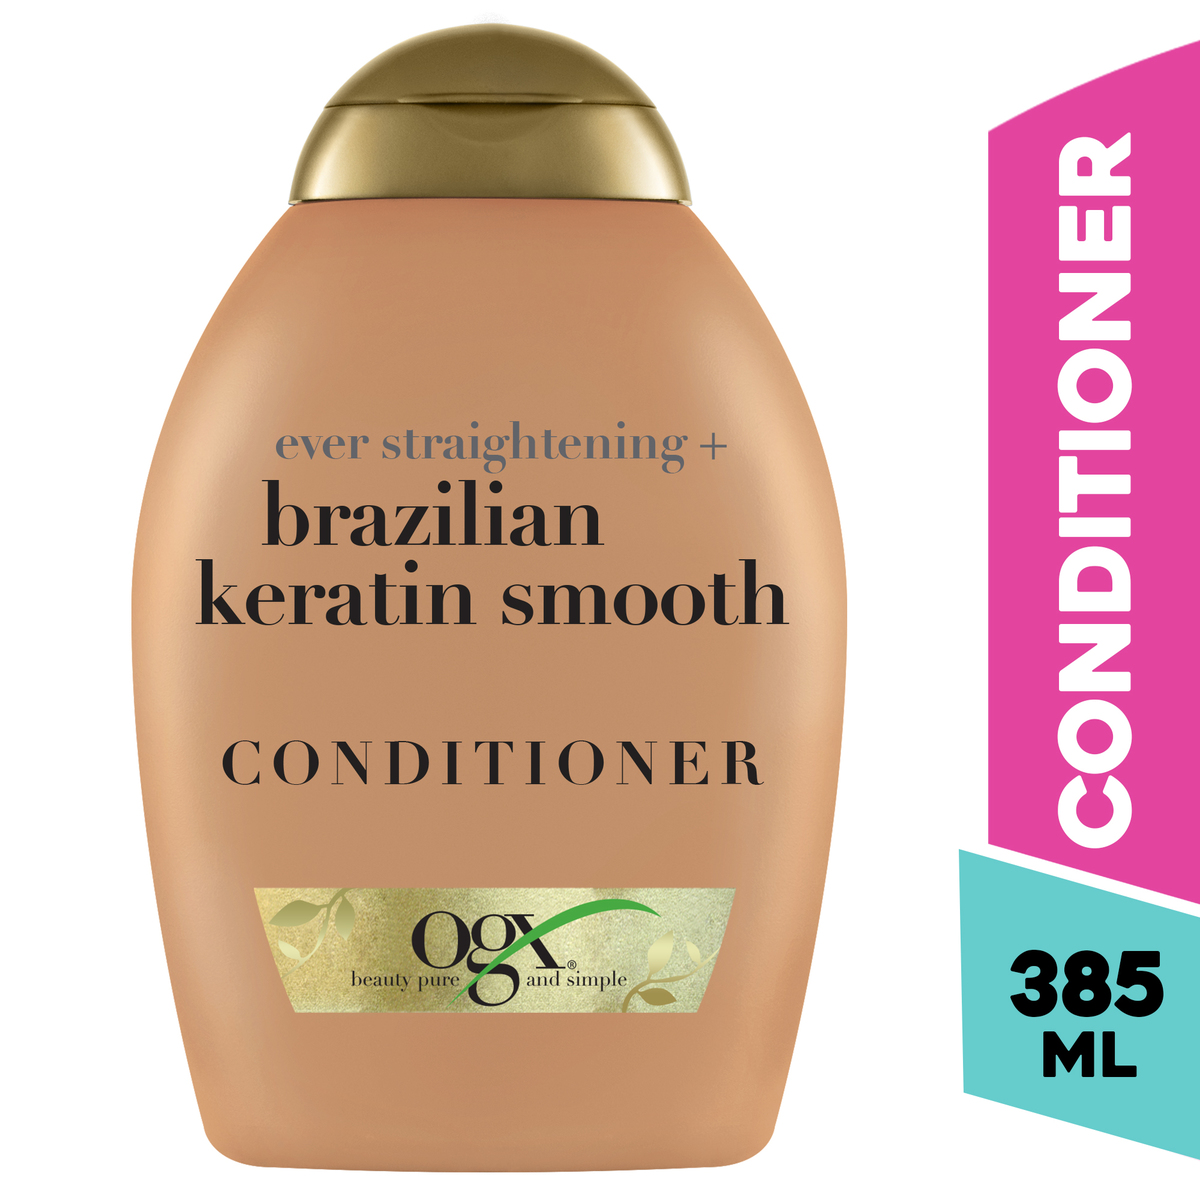 Ogx Conditioner Ever Straightening + Keratin Smooth 385 ml